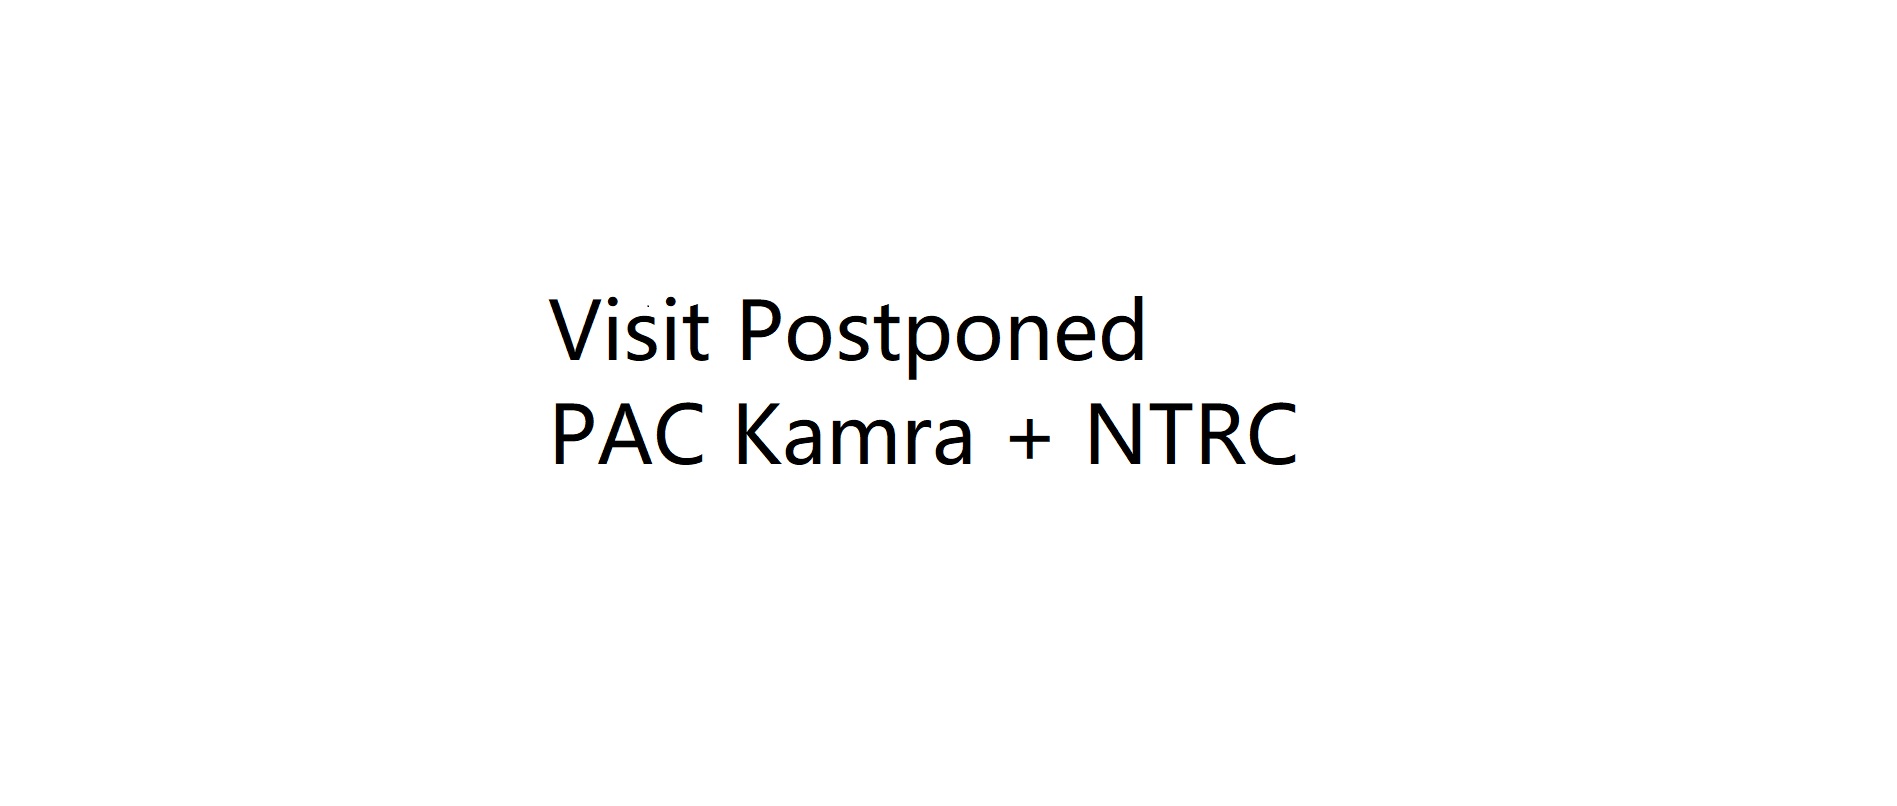 Visit Postponed (PAC Kamra + NRTC)